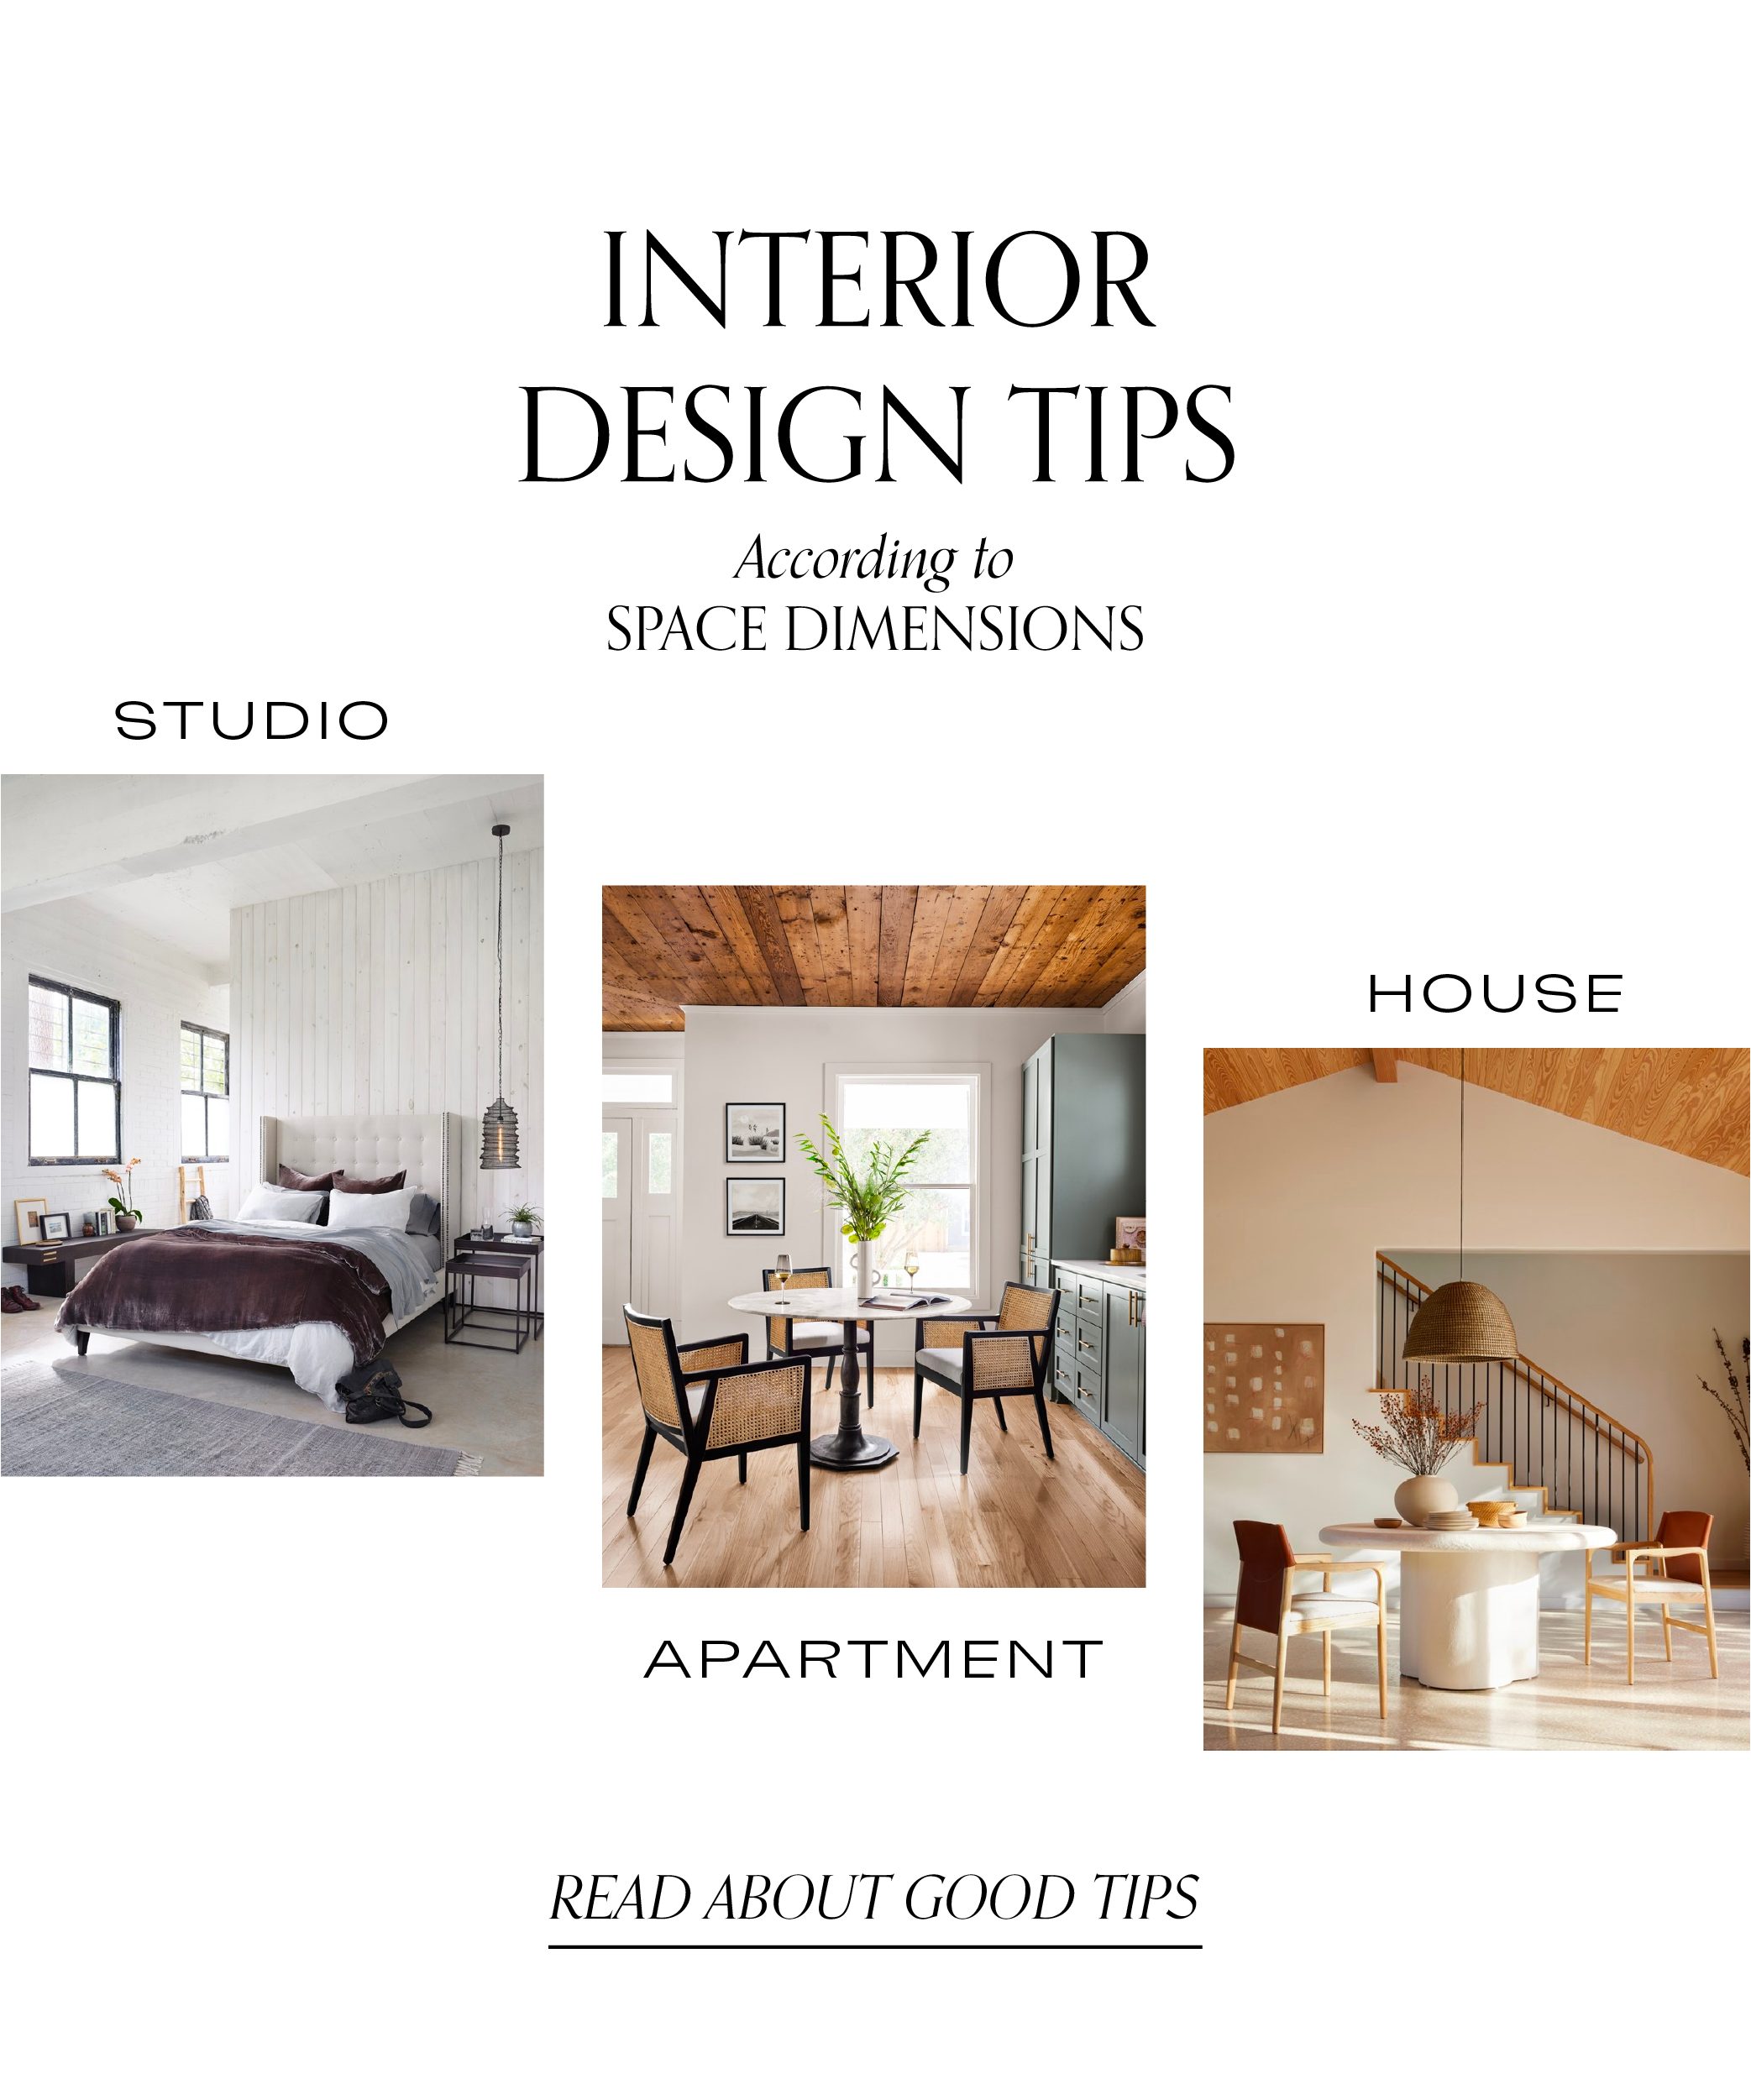 Interior Design Tips According to Space Dimensions